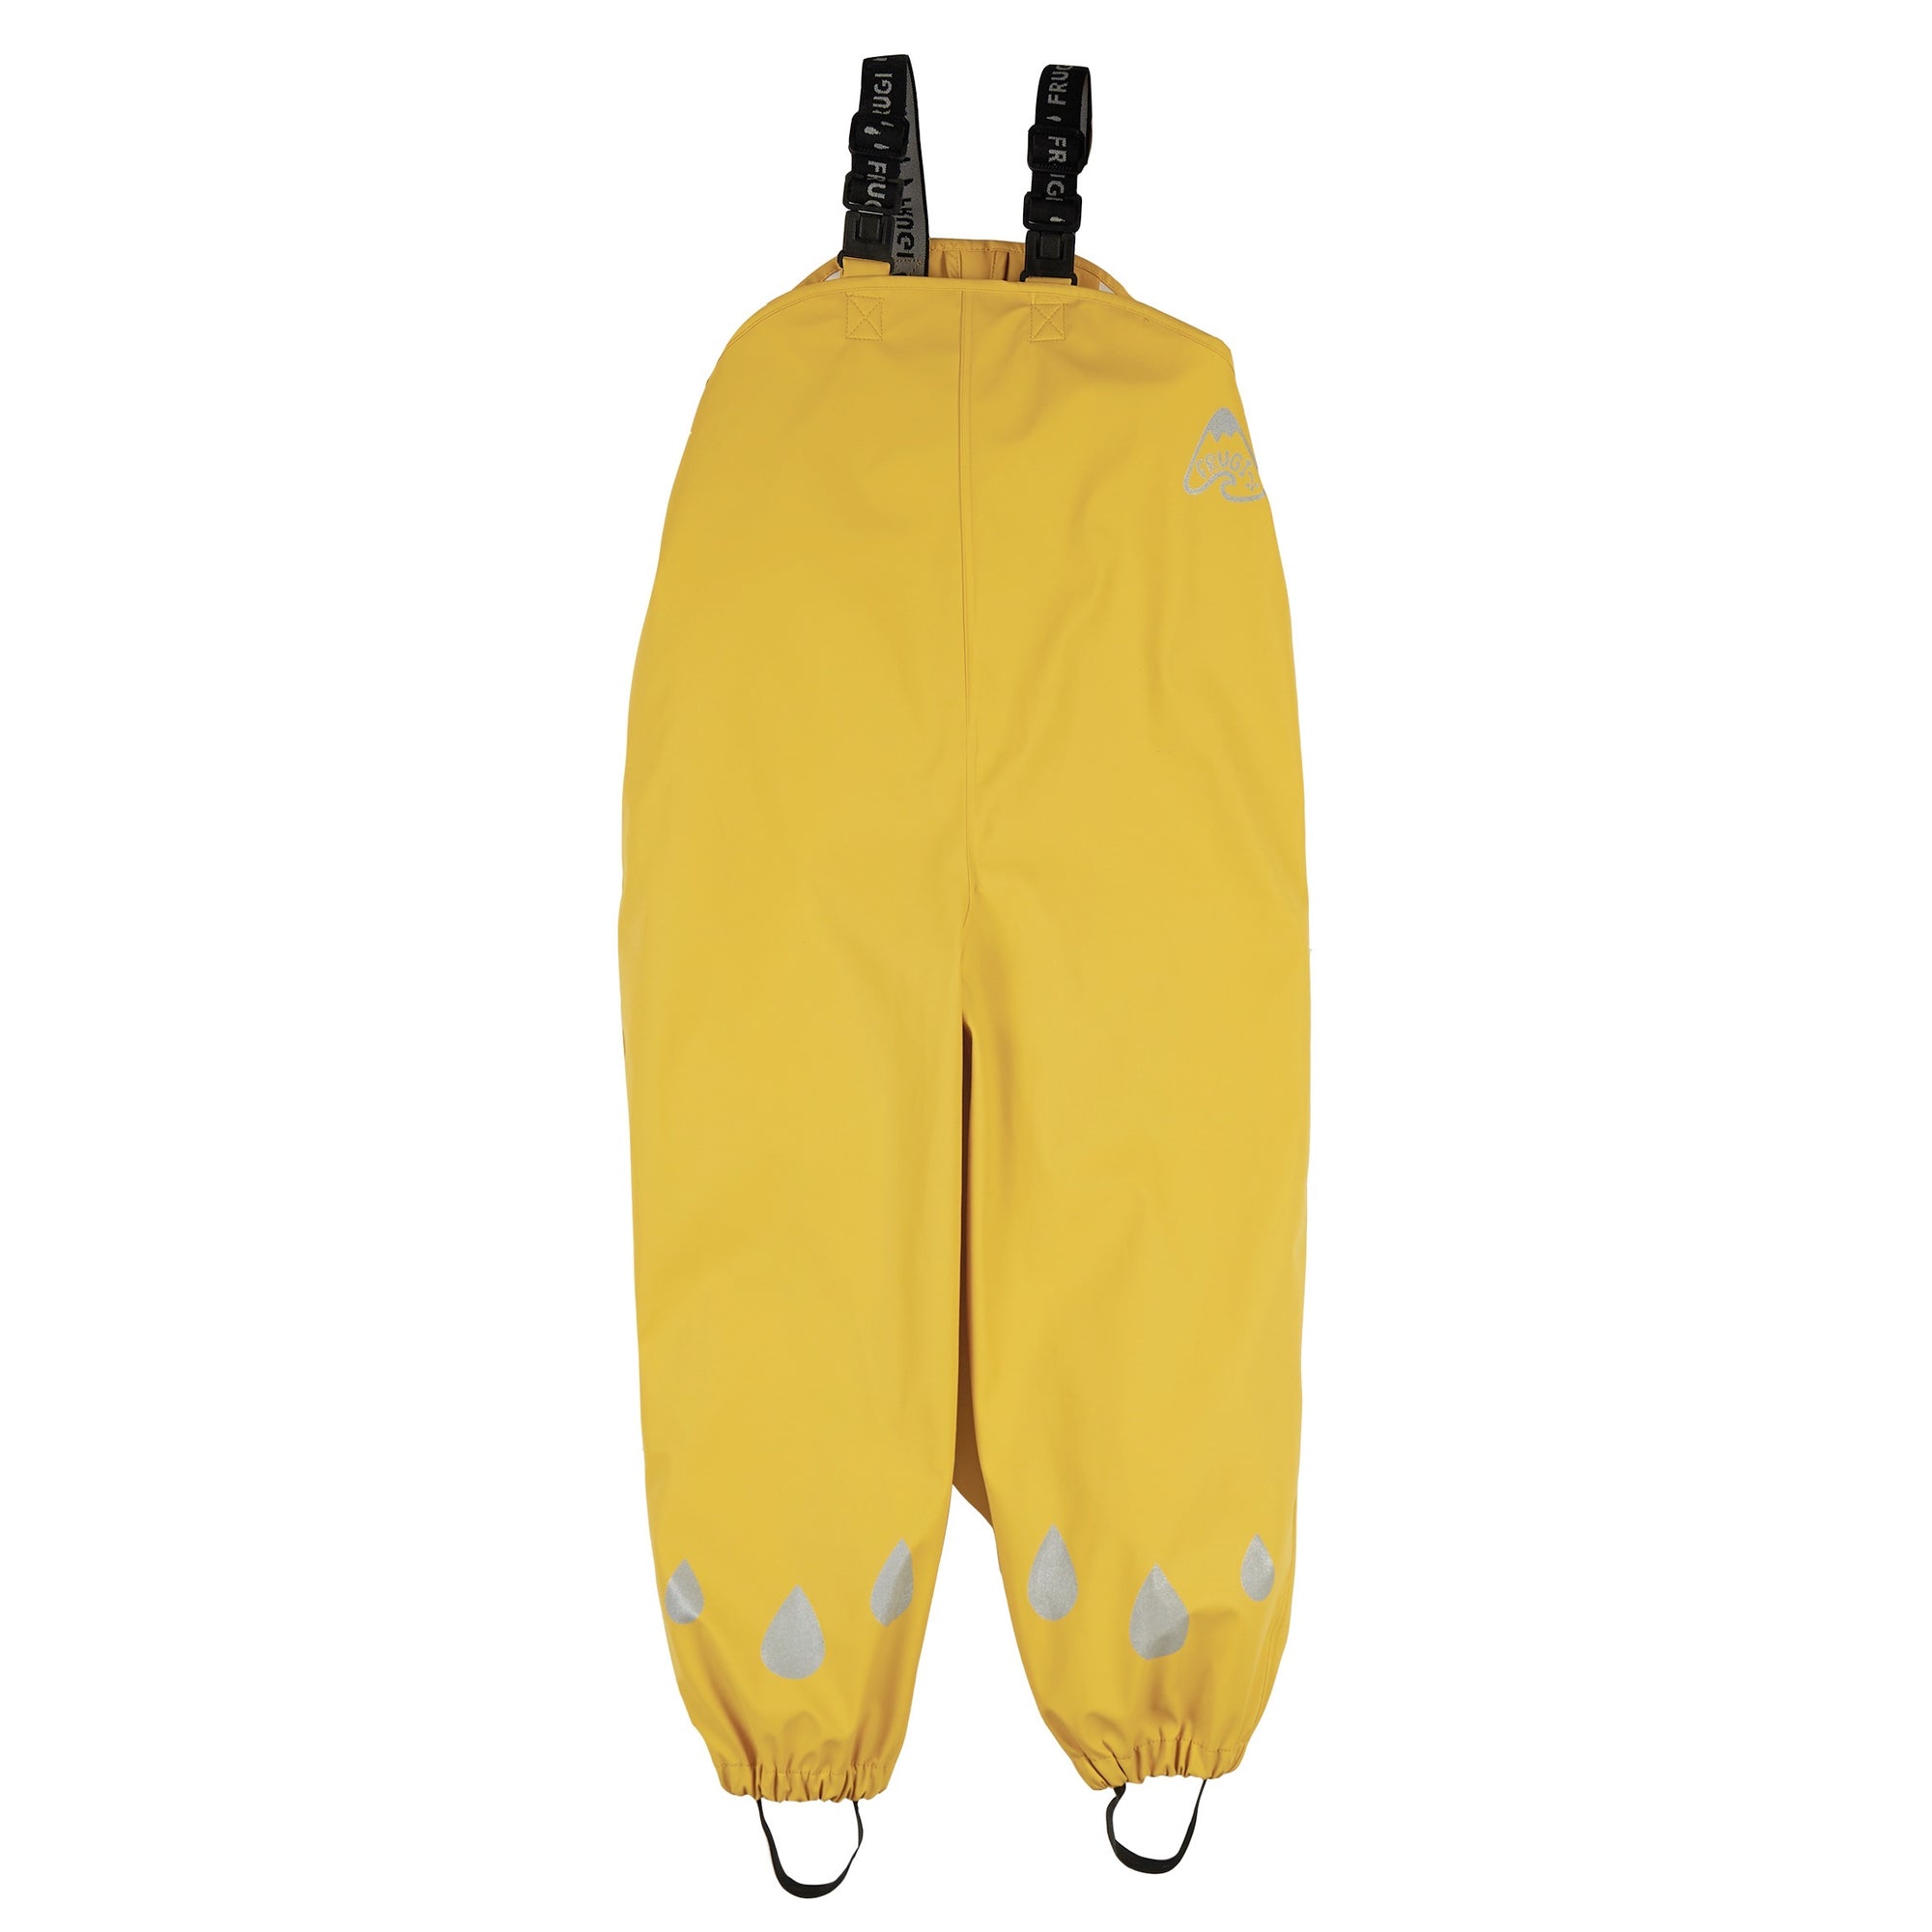 Frugi Puddle Buster Dungaree Bts101bub Clothing 2-3YRS / Yellow,3-4YRS / Yellow,4-5YRS / Yellow,5-6YRS / Yellow,6-7YRS / Yellow,7-8YRS / Yellow,1-2 YRS / Yellow